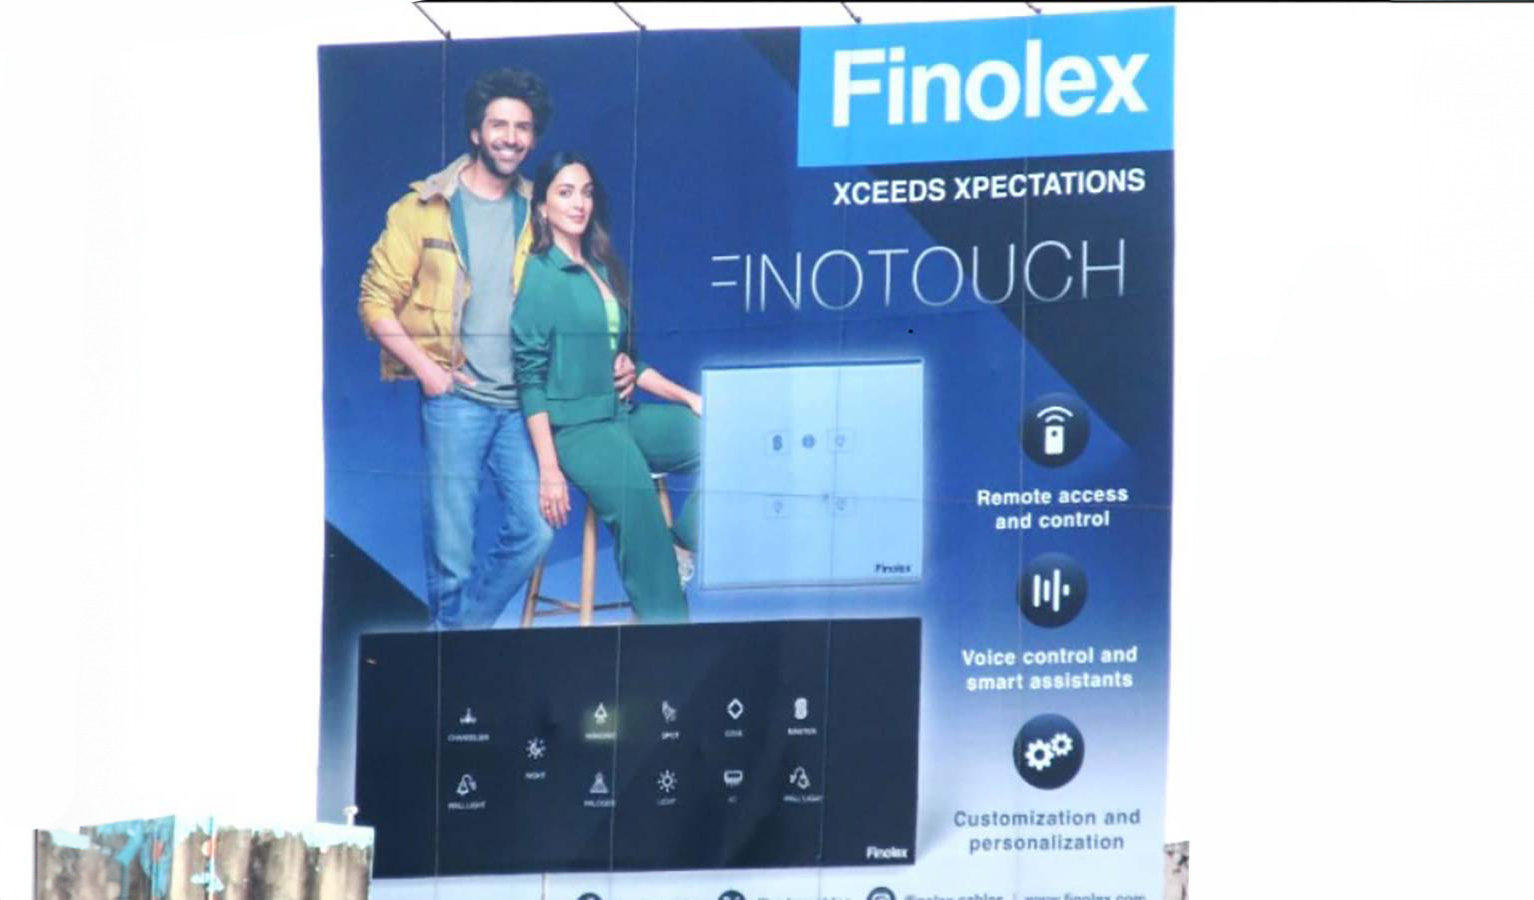 Finolex OOH campaign 